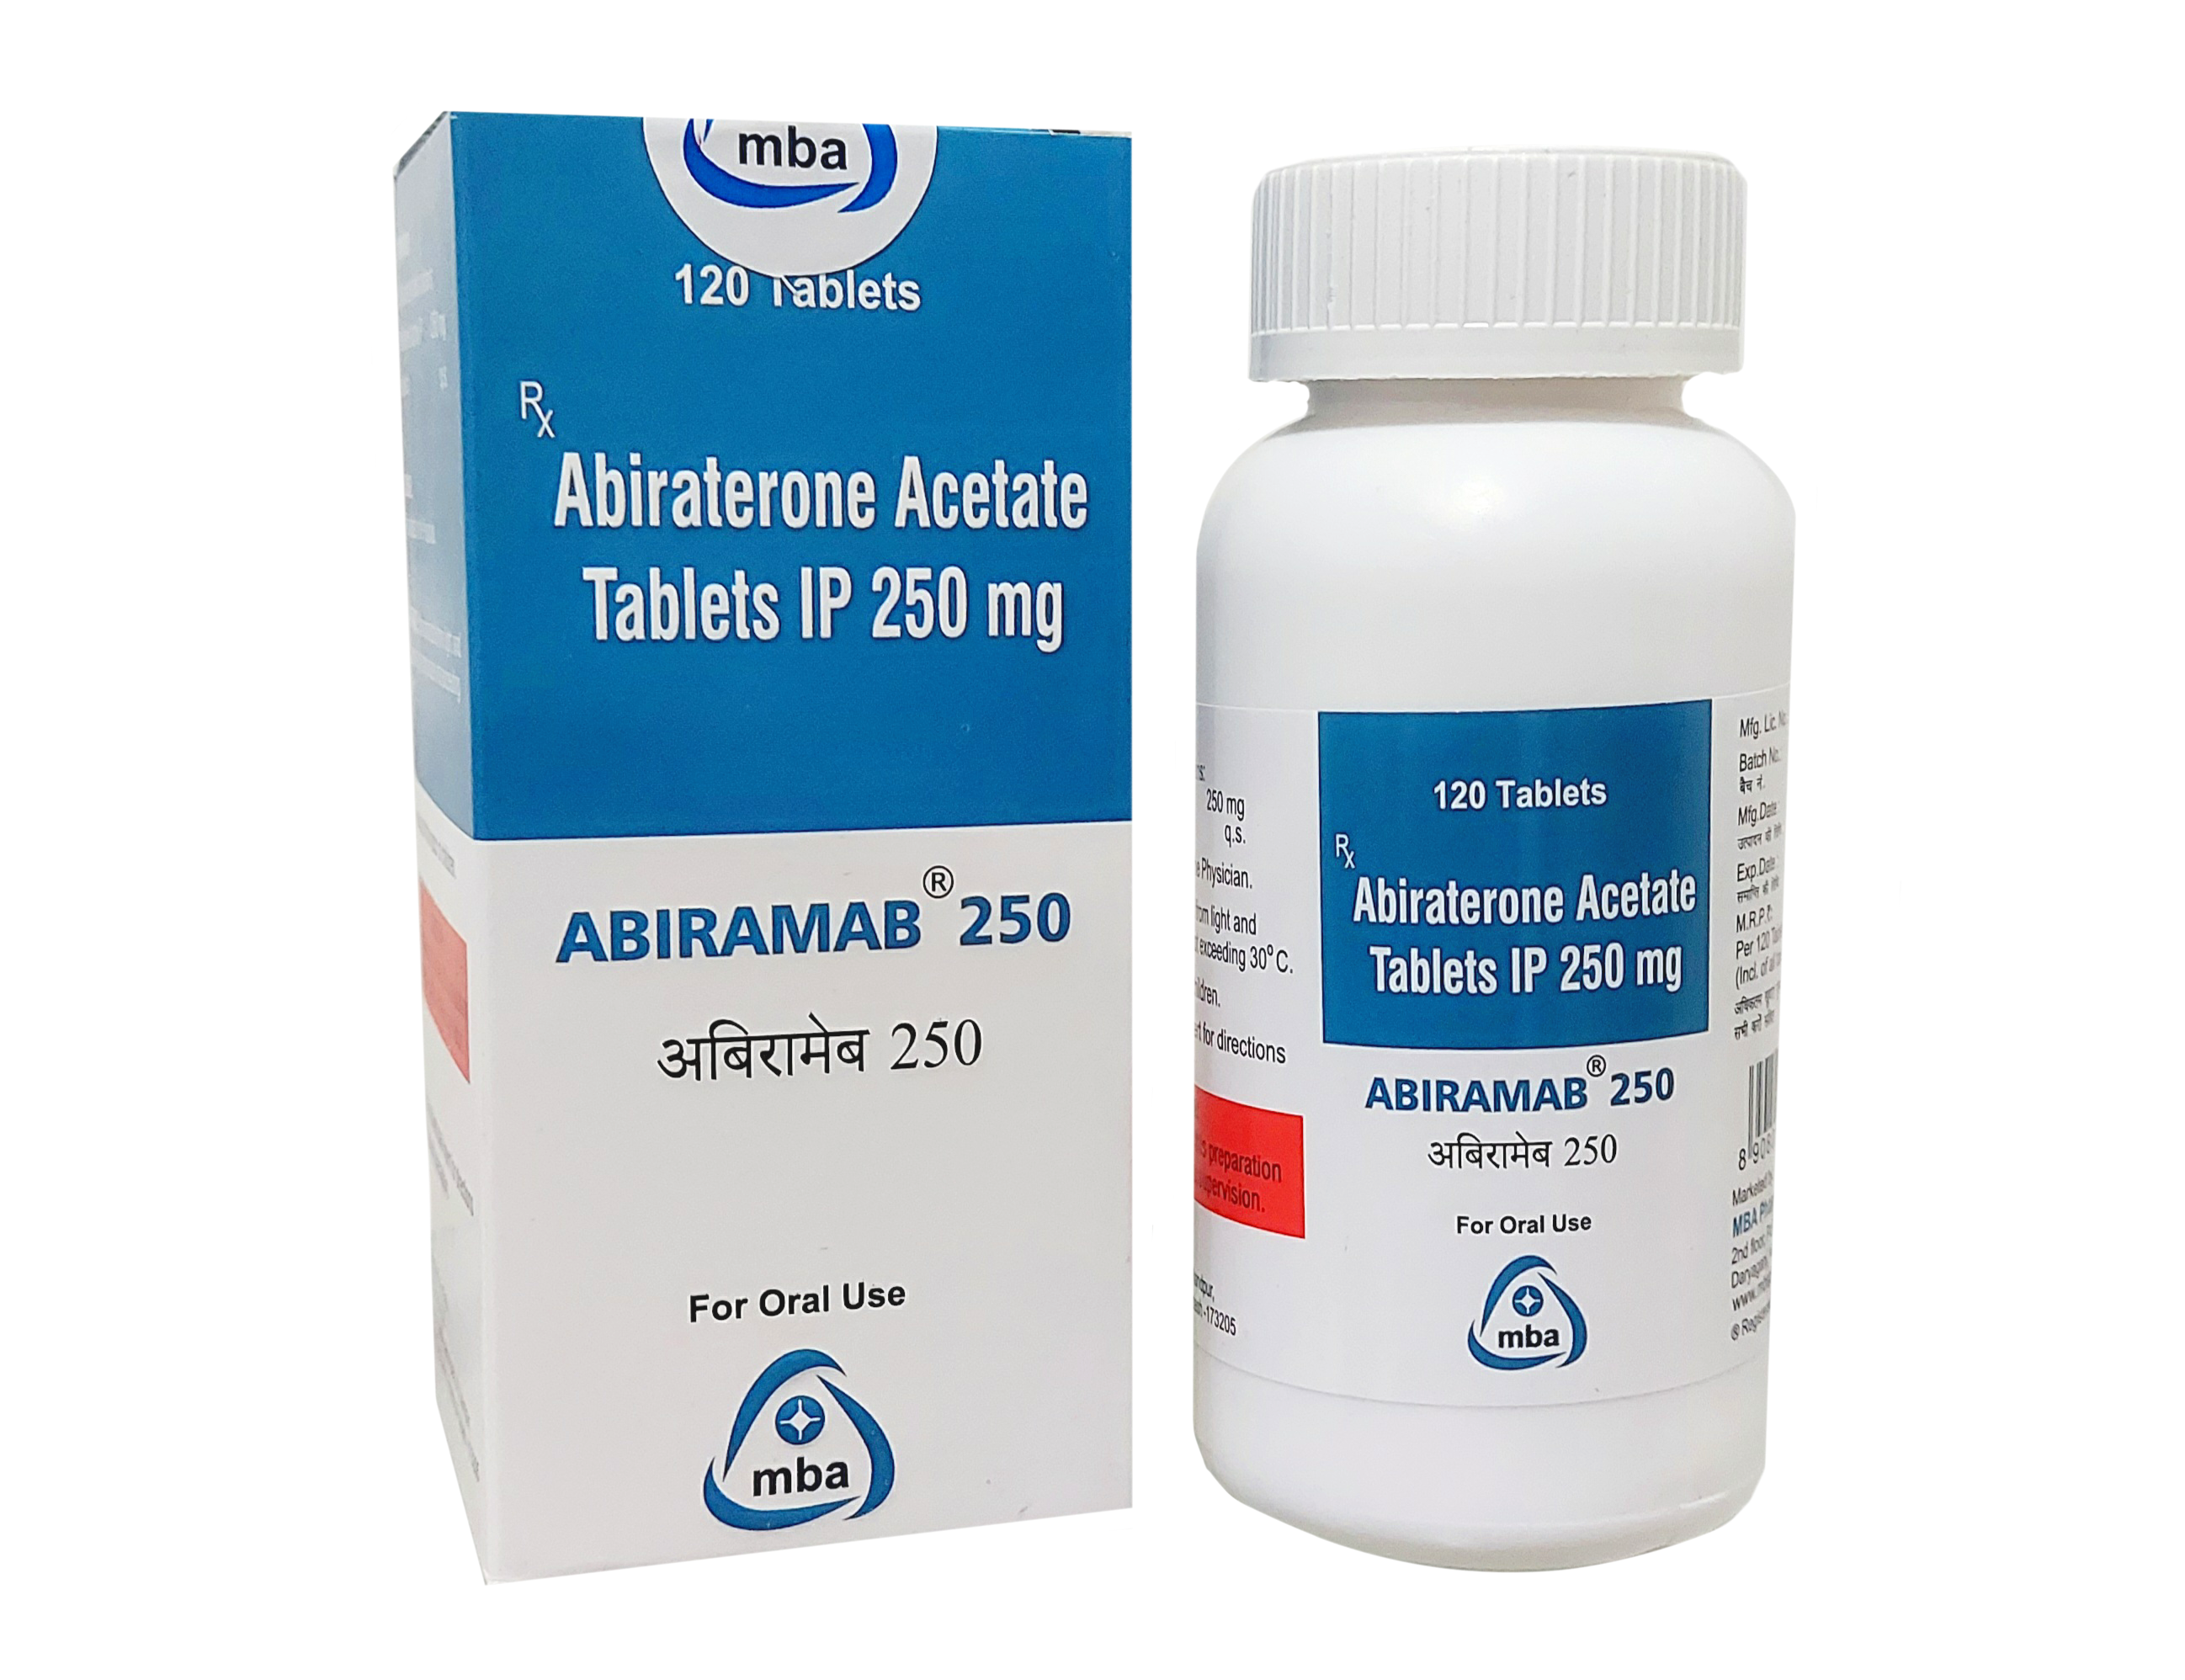 ABIRAMAB 250 - Abiraterone Acetate 250 mg